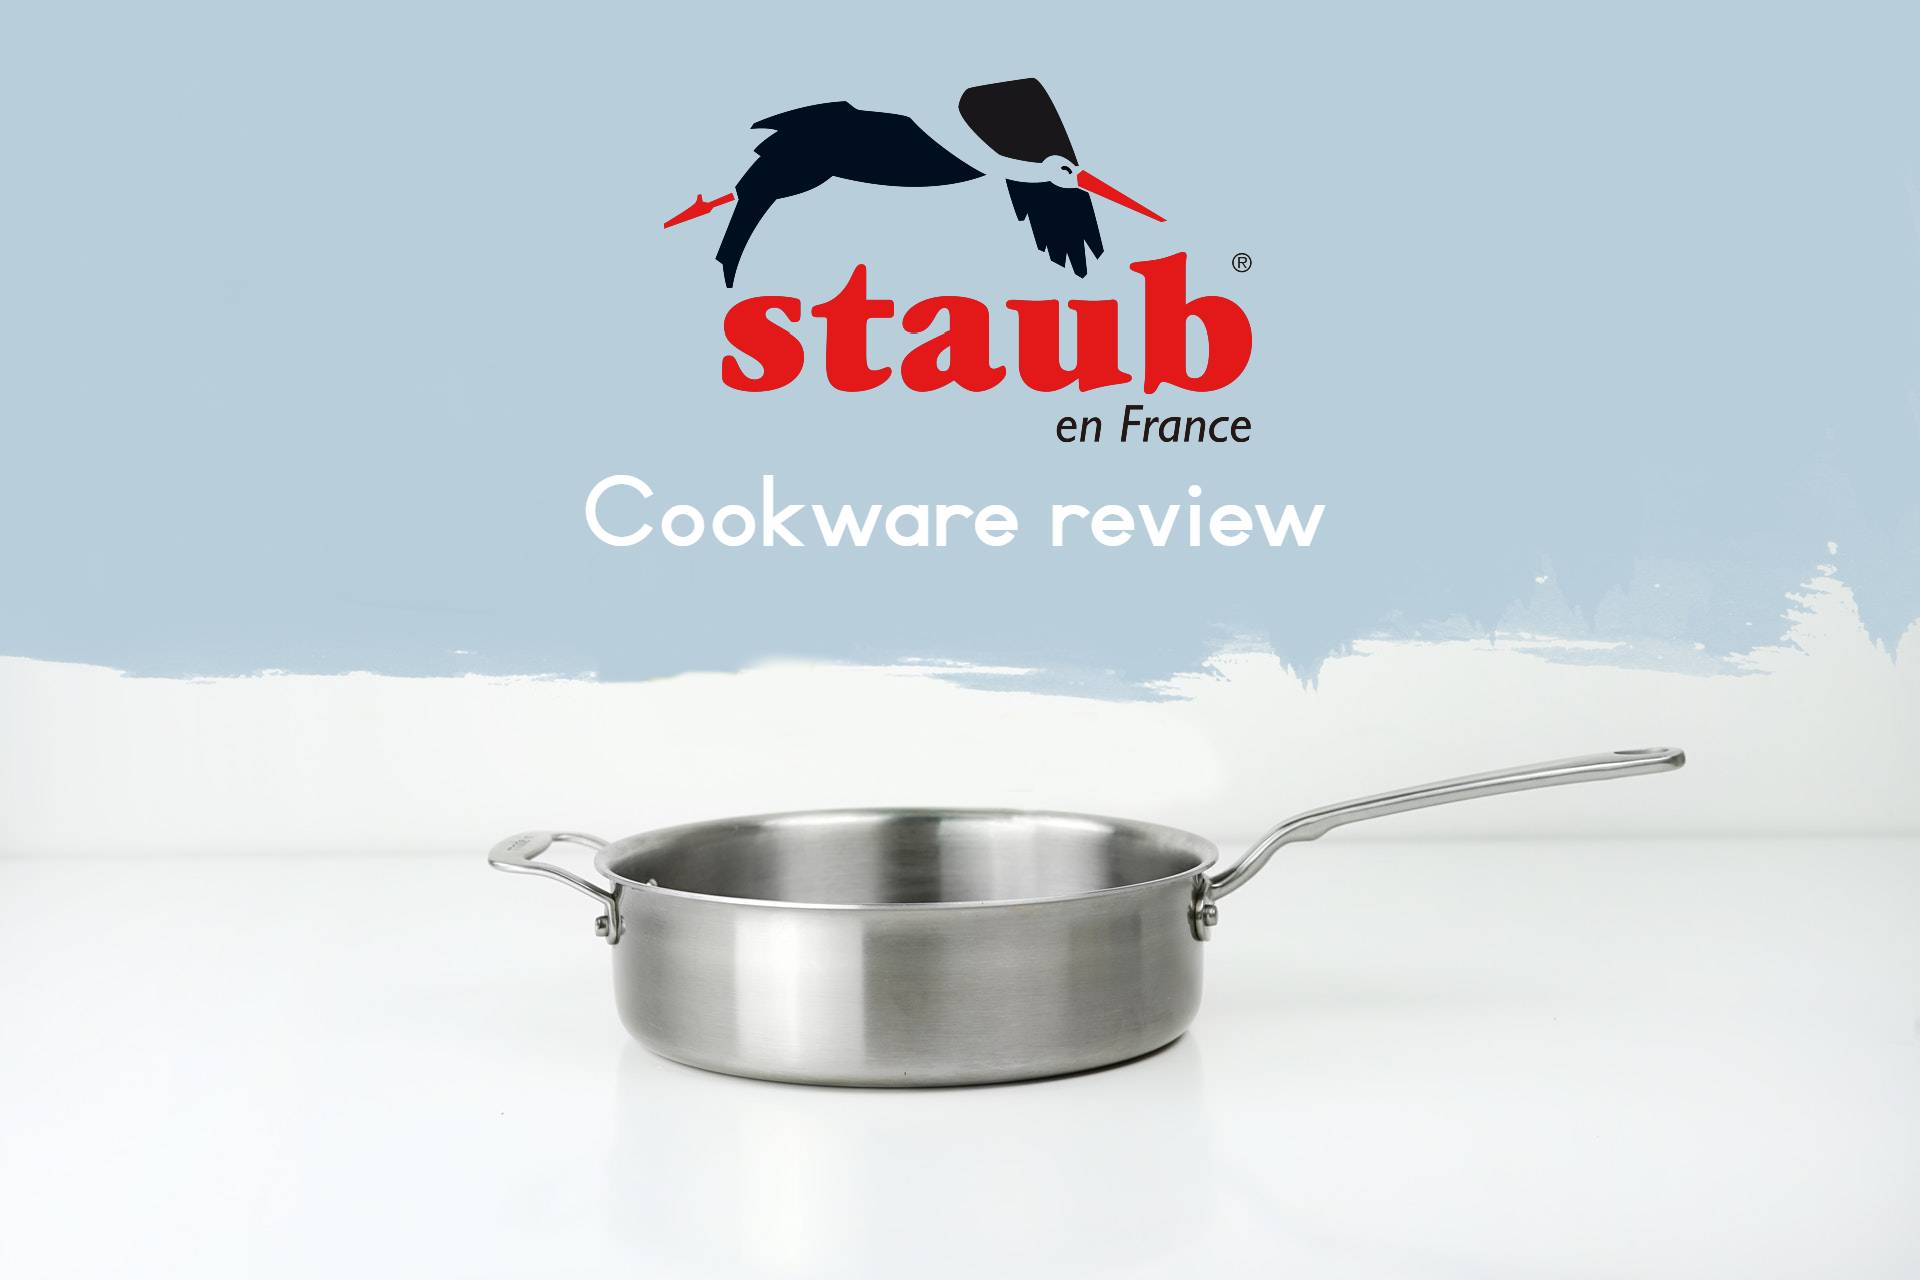 https://kitchenfold.com/wp-content/uploads/2020/06/staub-cookware-review.jpg